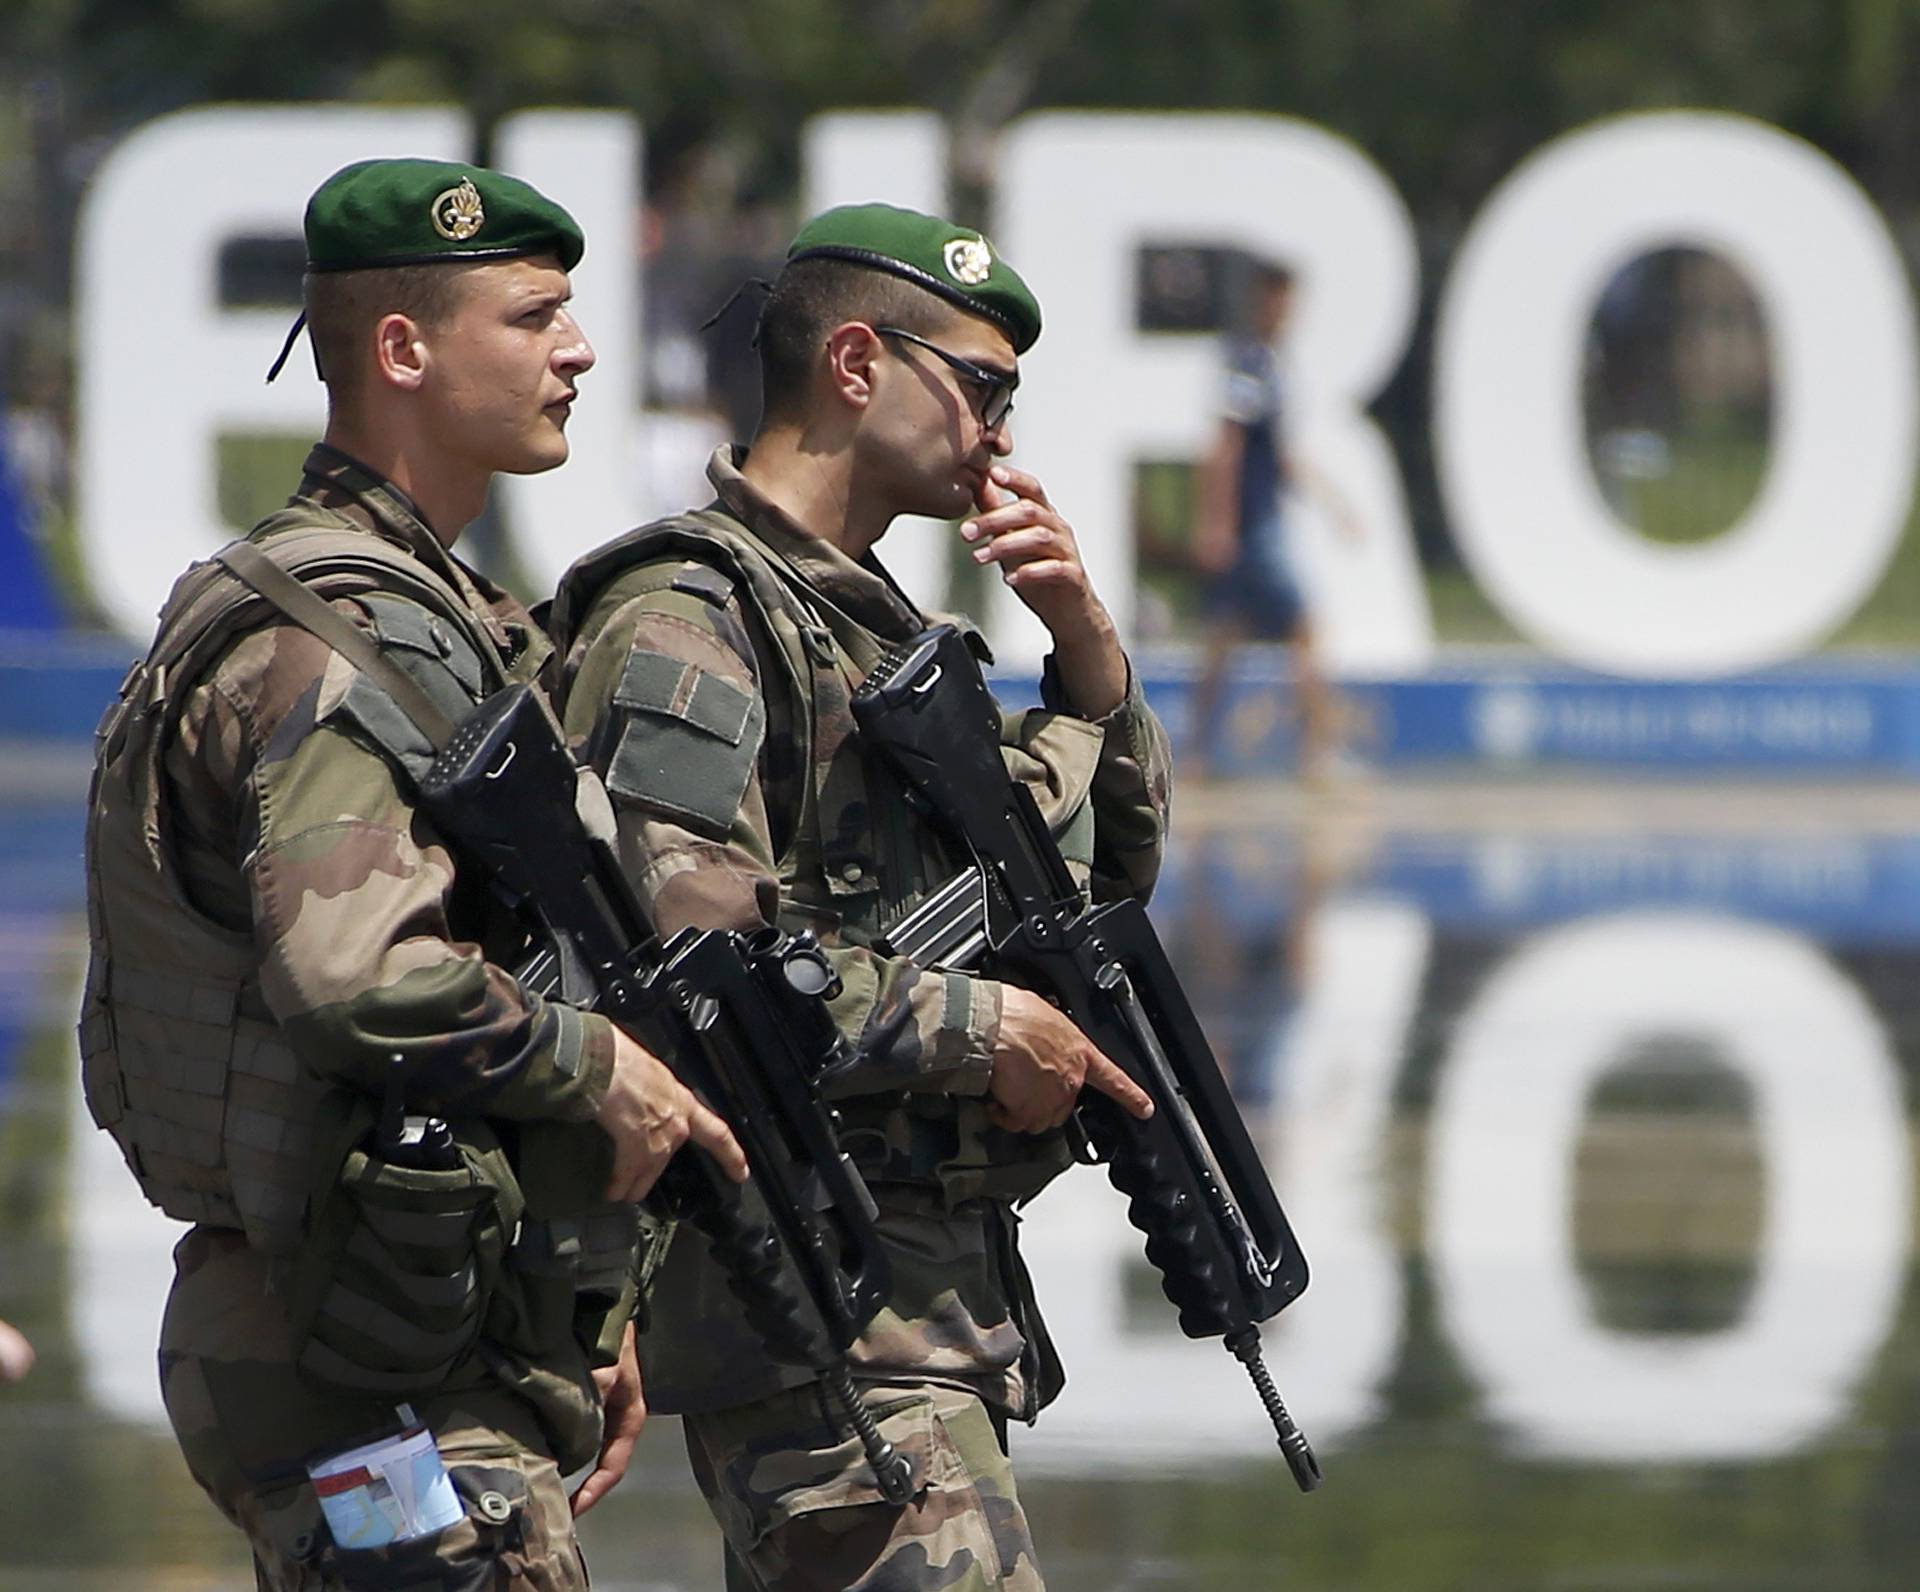 Soldiers patrol ahead of the UEFA 2016 European Championship in Nice